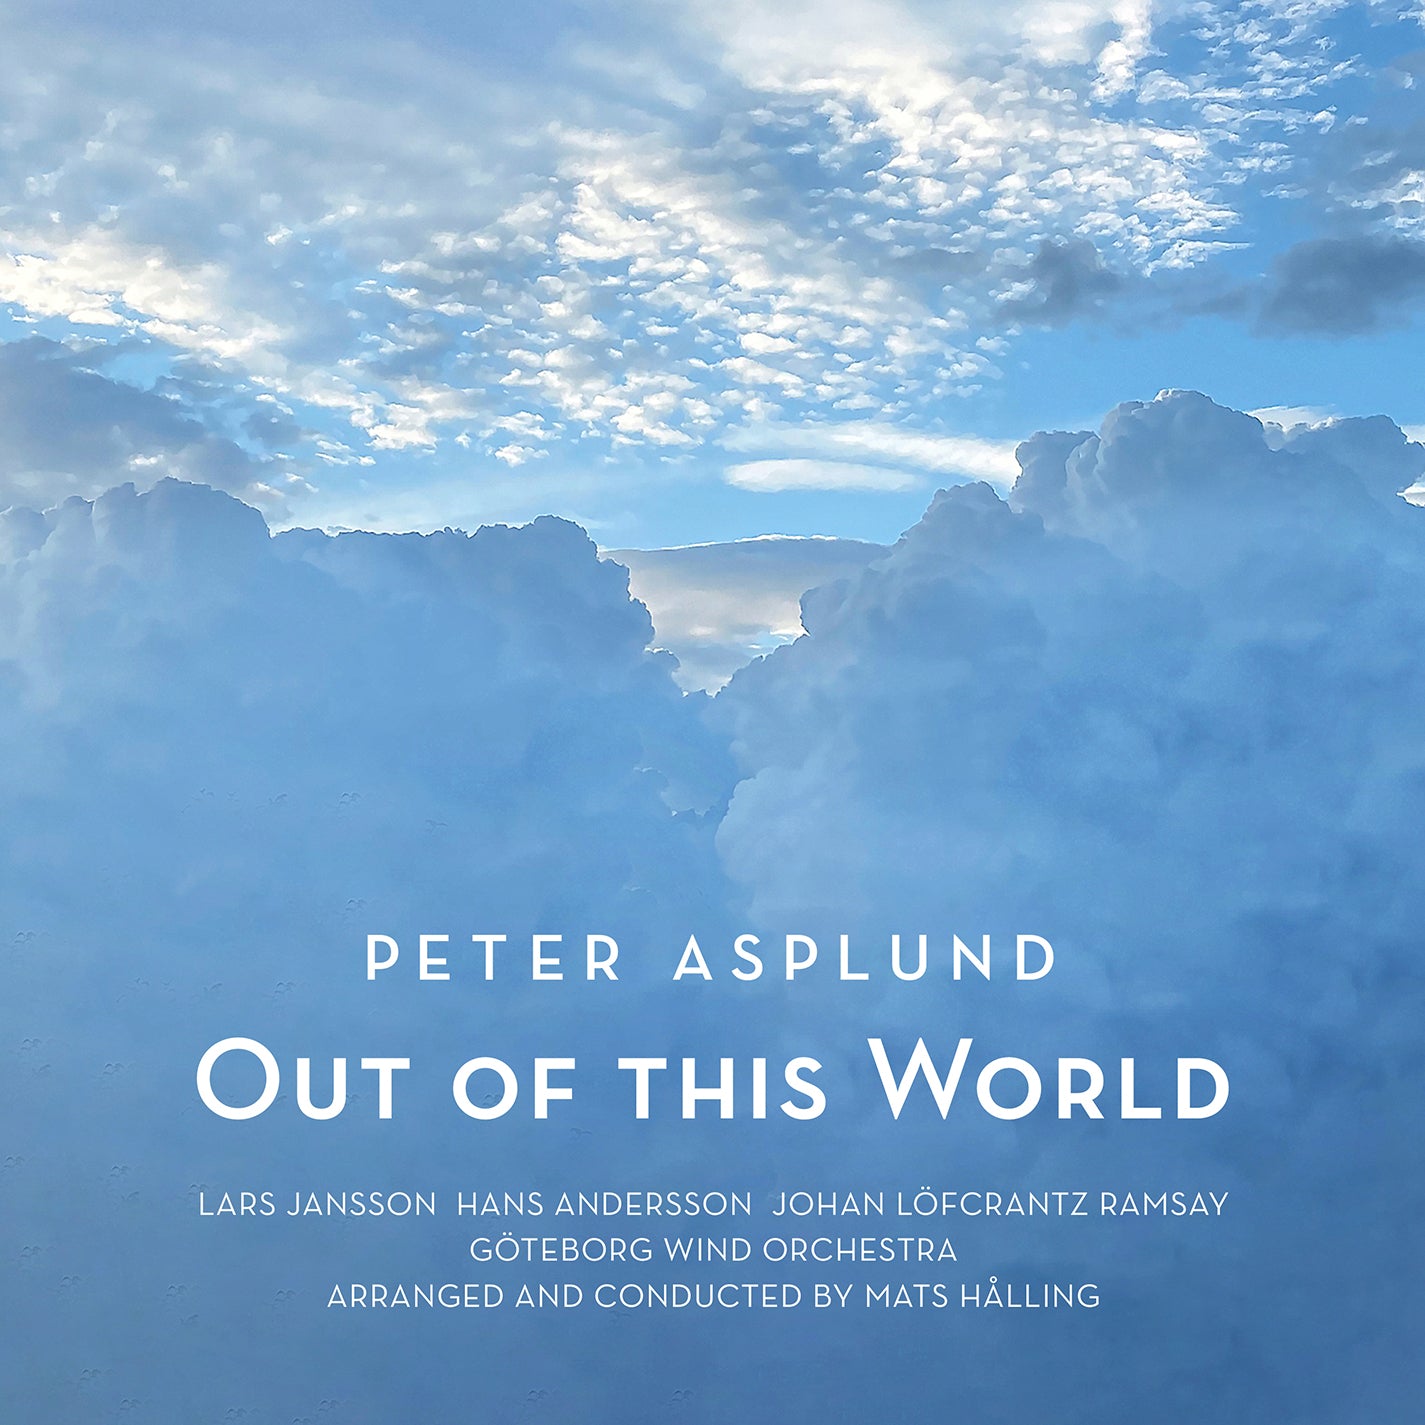 Out of this World / Peter Asplund Quartet, Hålling, Göteborg Wind Orchestra